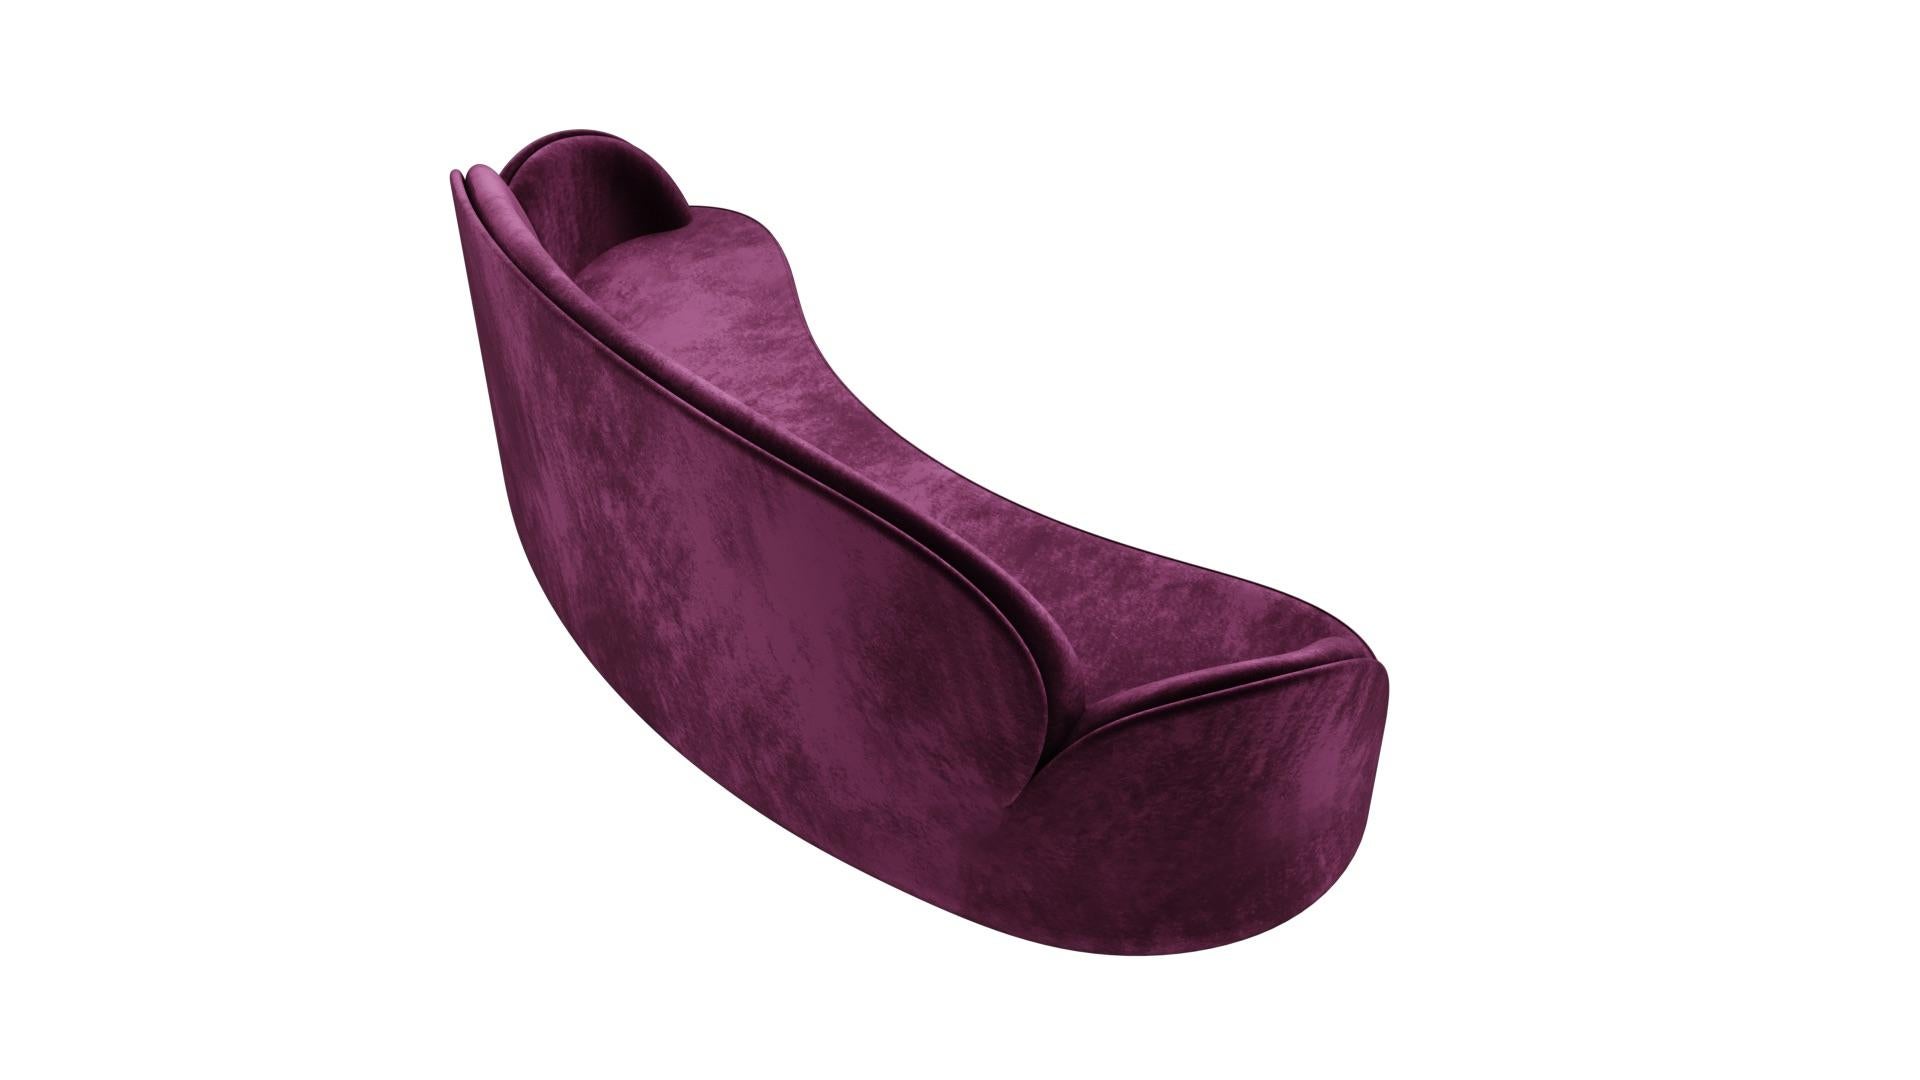 purple velvet couch